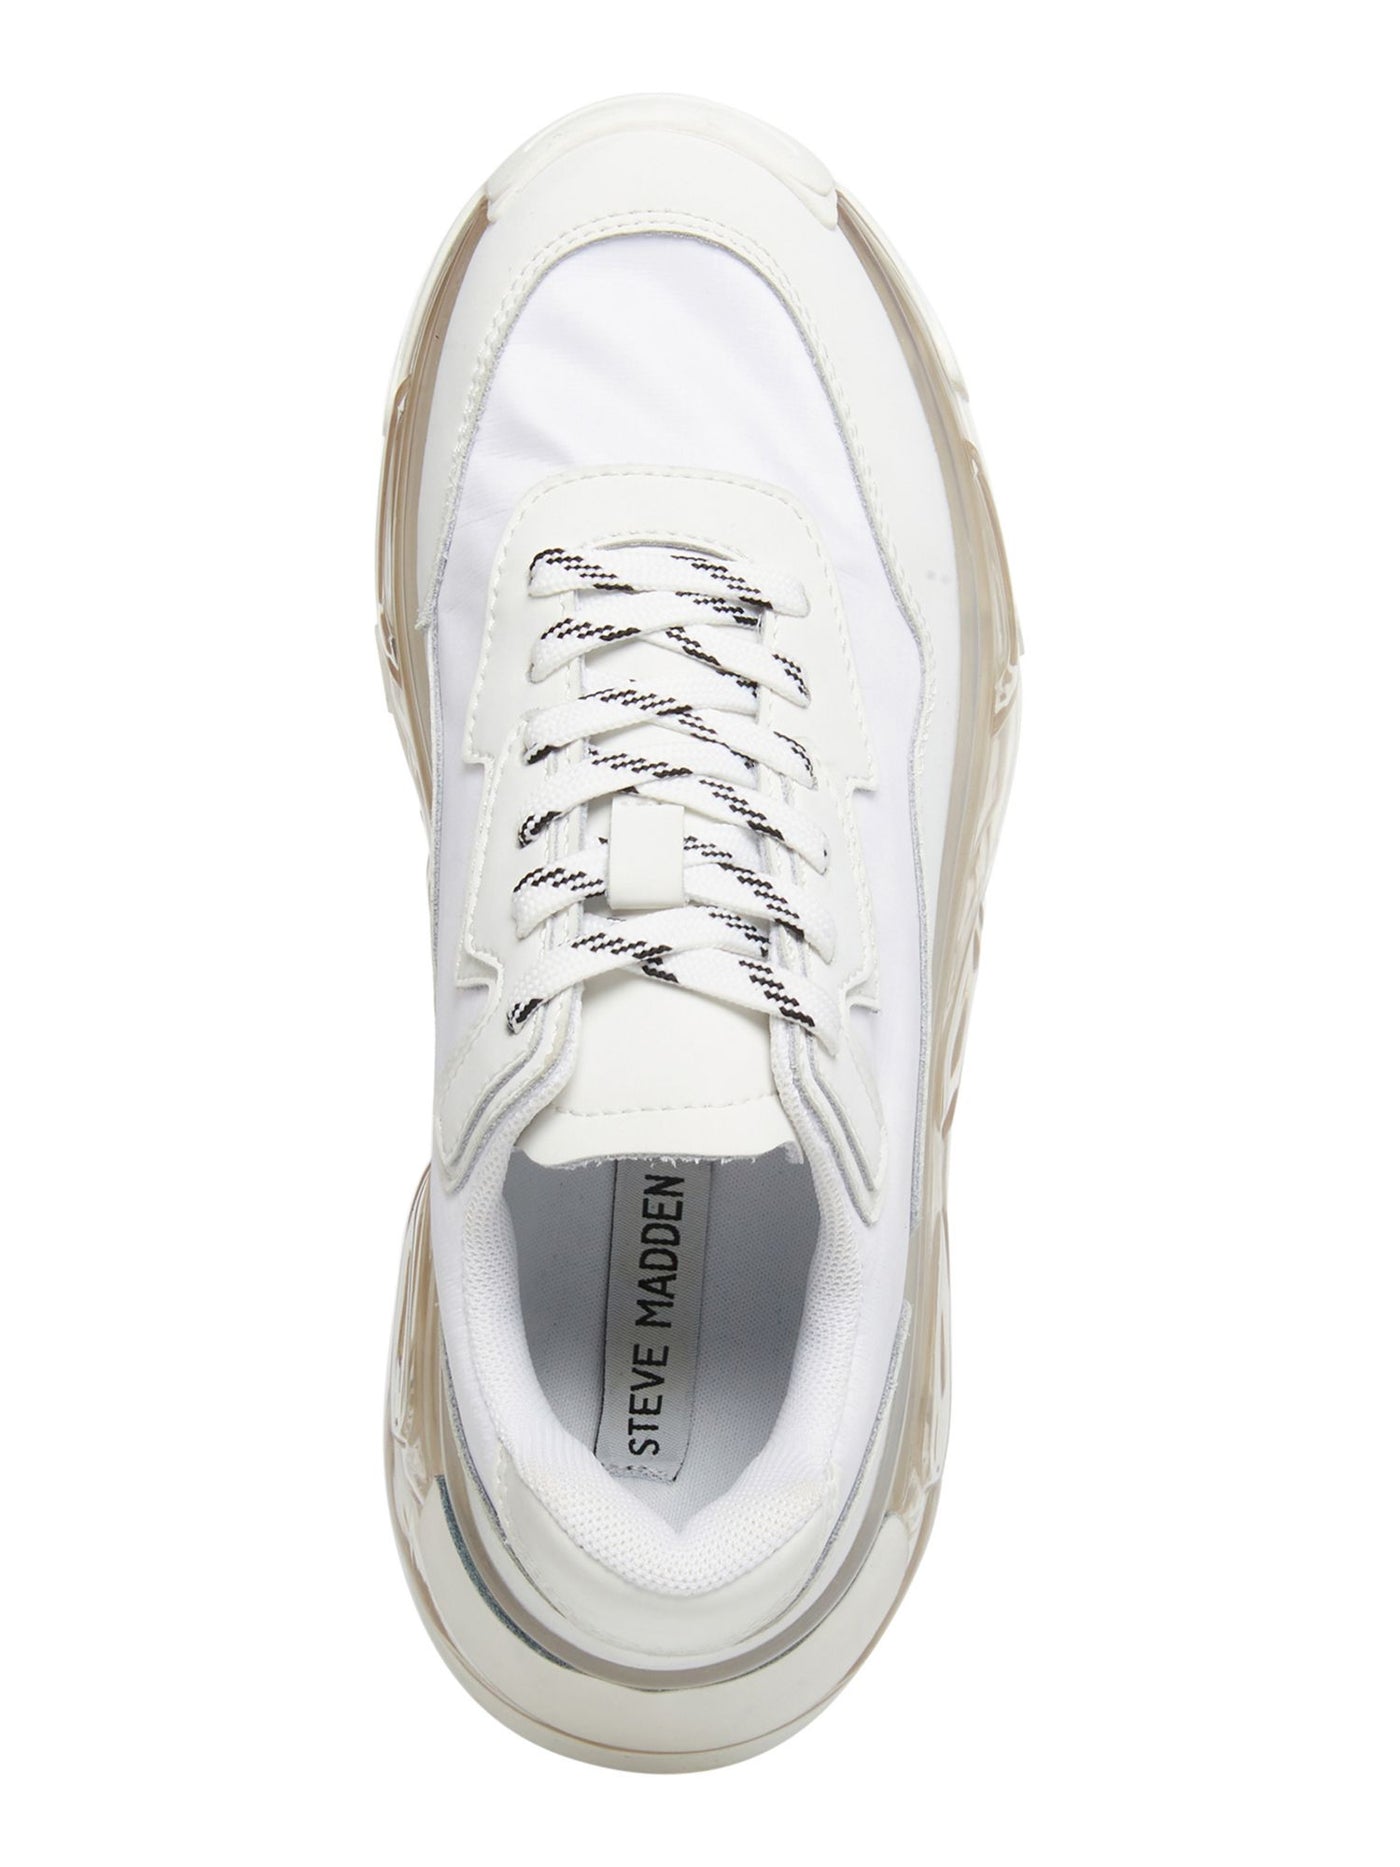 STEVE MADDEN Womens White 1" Platform Comfort Blatant Round Toe Wedge Lace-Up Leather Athletic Training Shoes 6 M